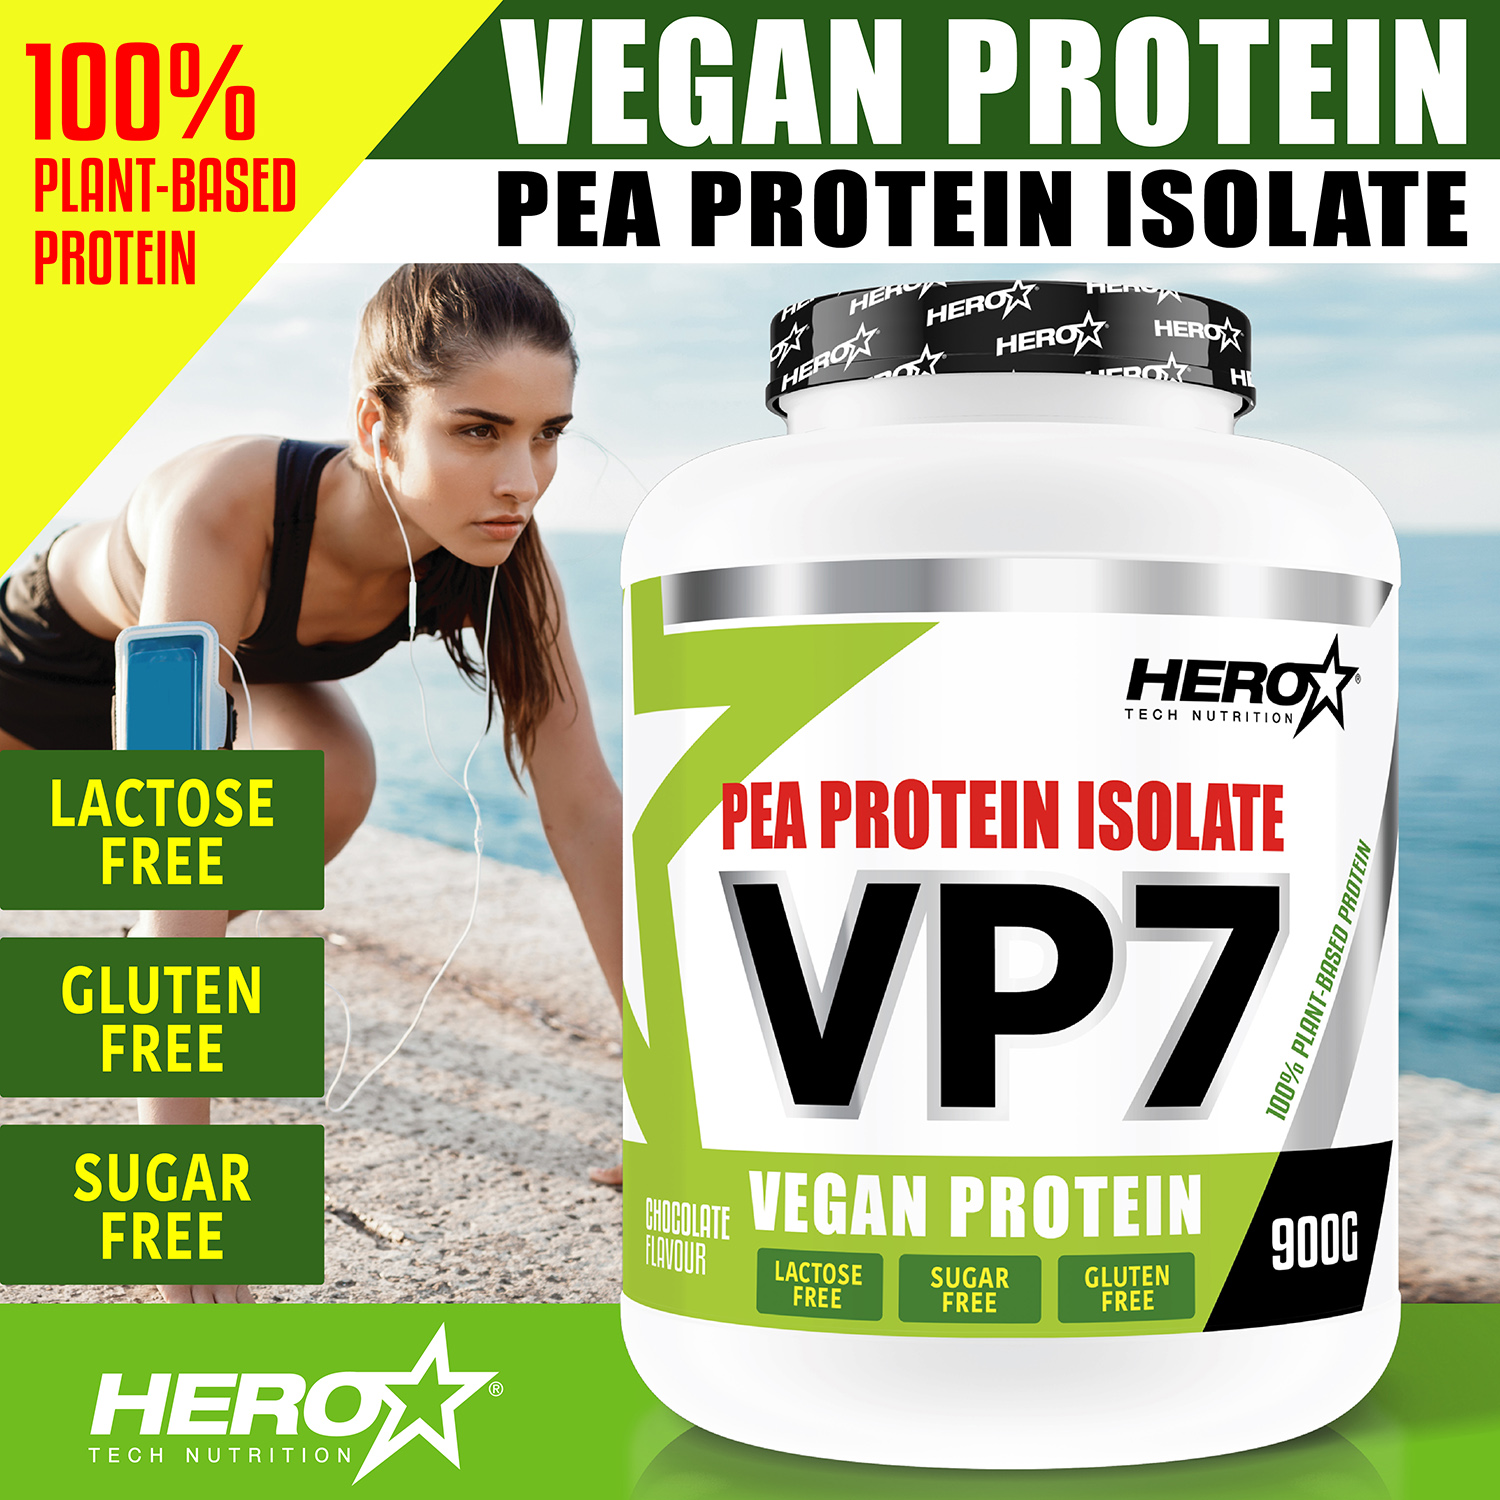 VP7 HERO TECH NUTRITION - vegetable protein - PEA PROTEIN herotechnutrition